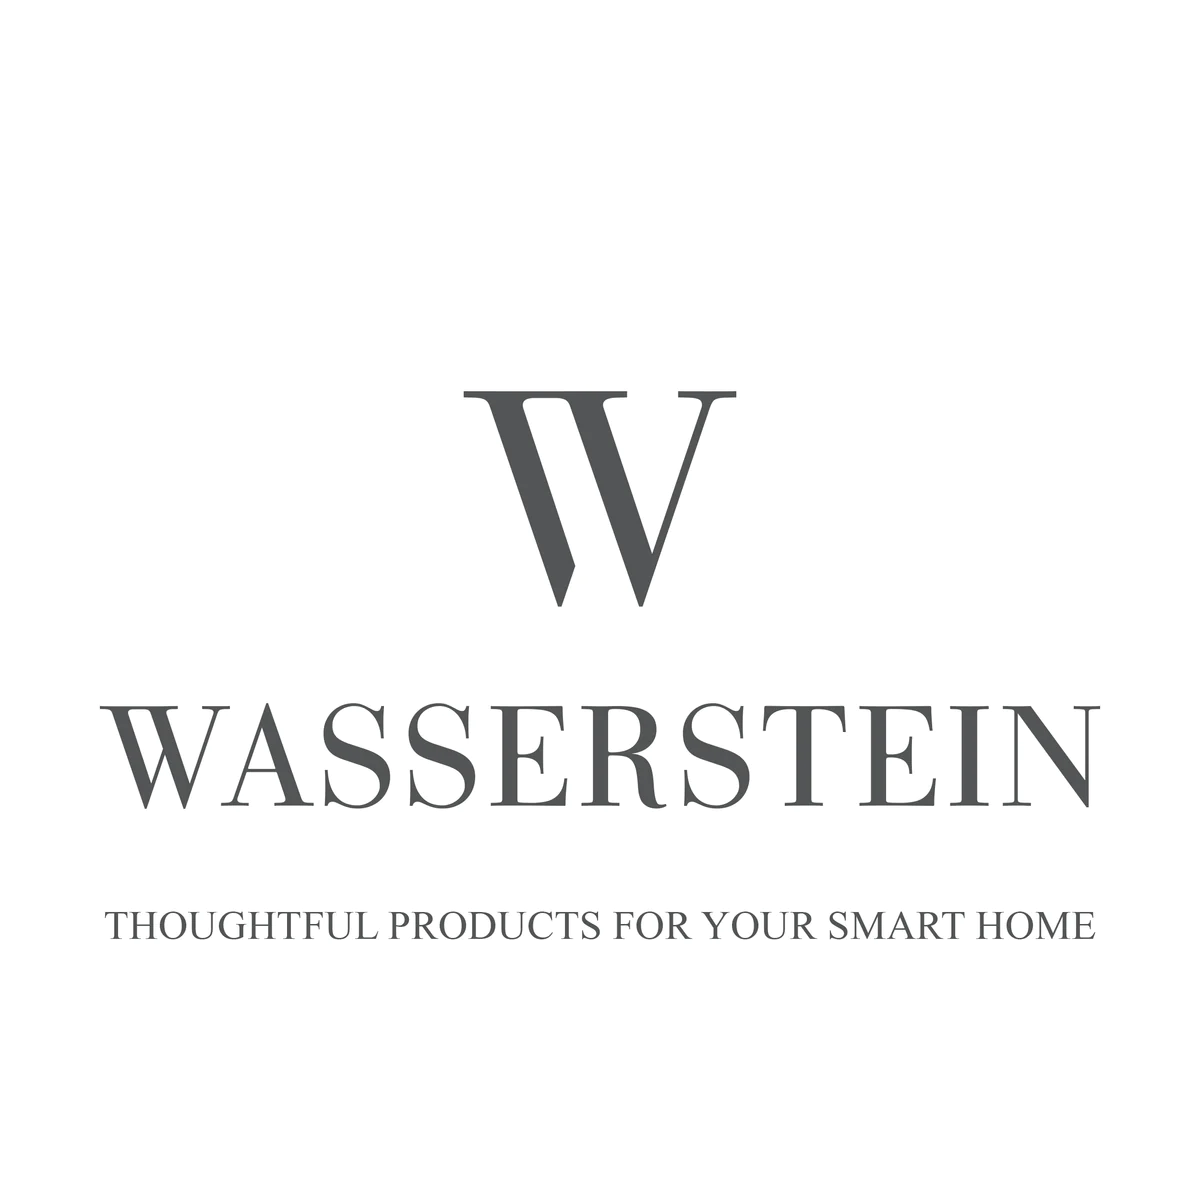 Subscribe To Wasserstein Newsletter & Get 5% Off Amazing Discounts